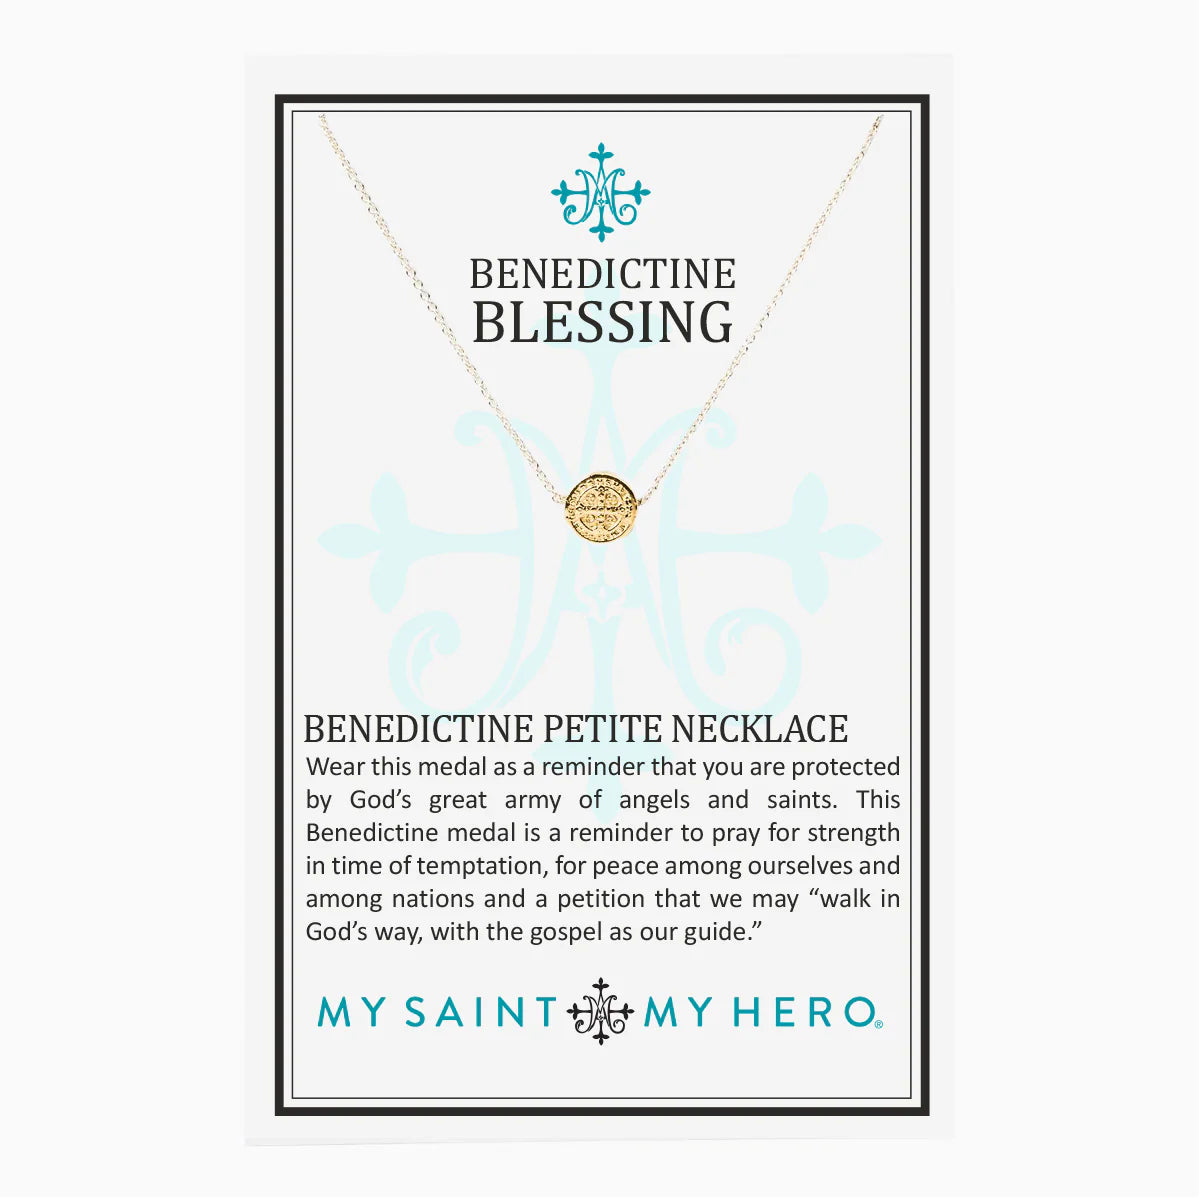 Benedictine Blessing Petite Necklace